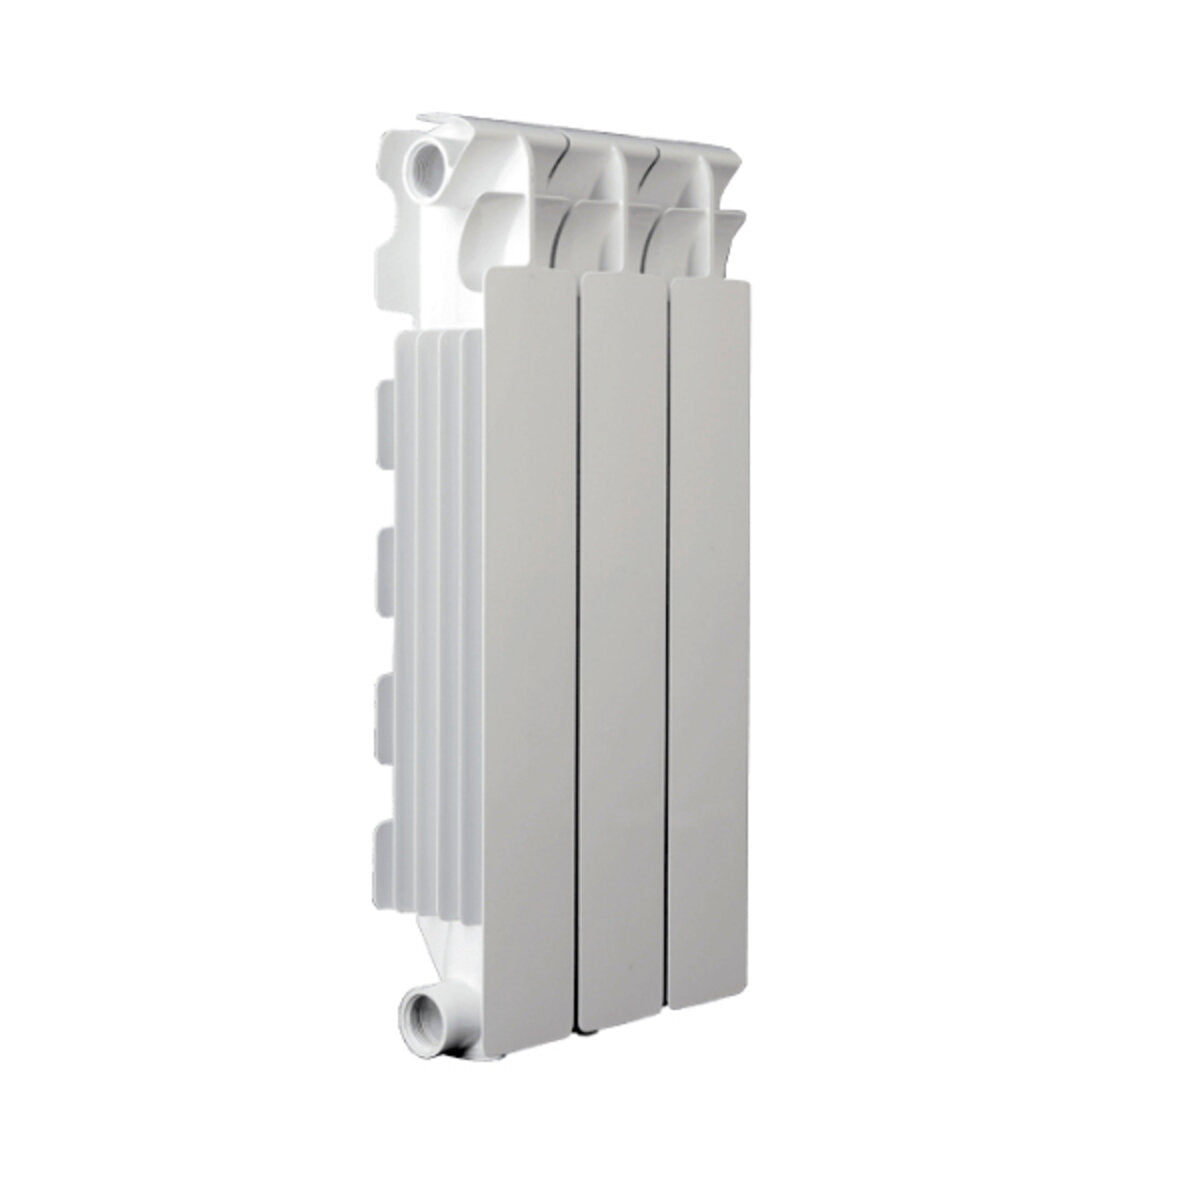 Fondital radiator in die-cast aluminum calidor super b4 3 elements center distance 350 mm